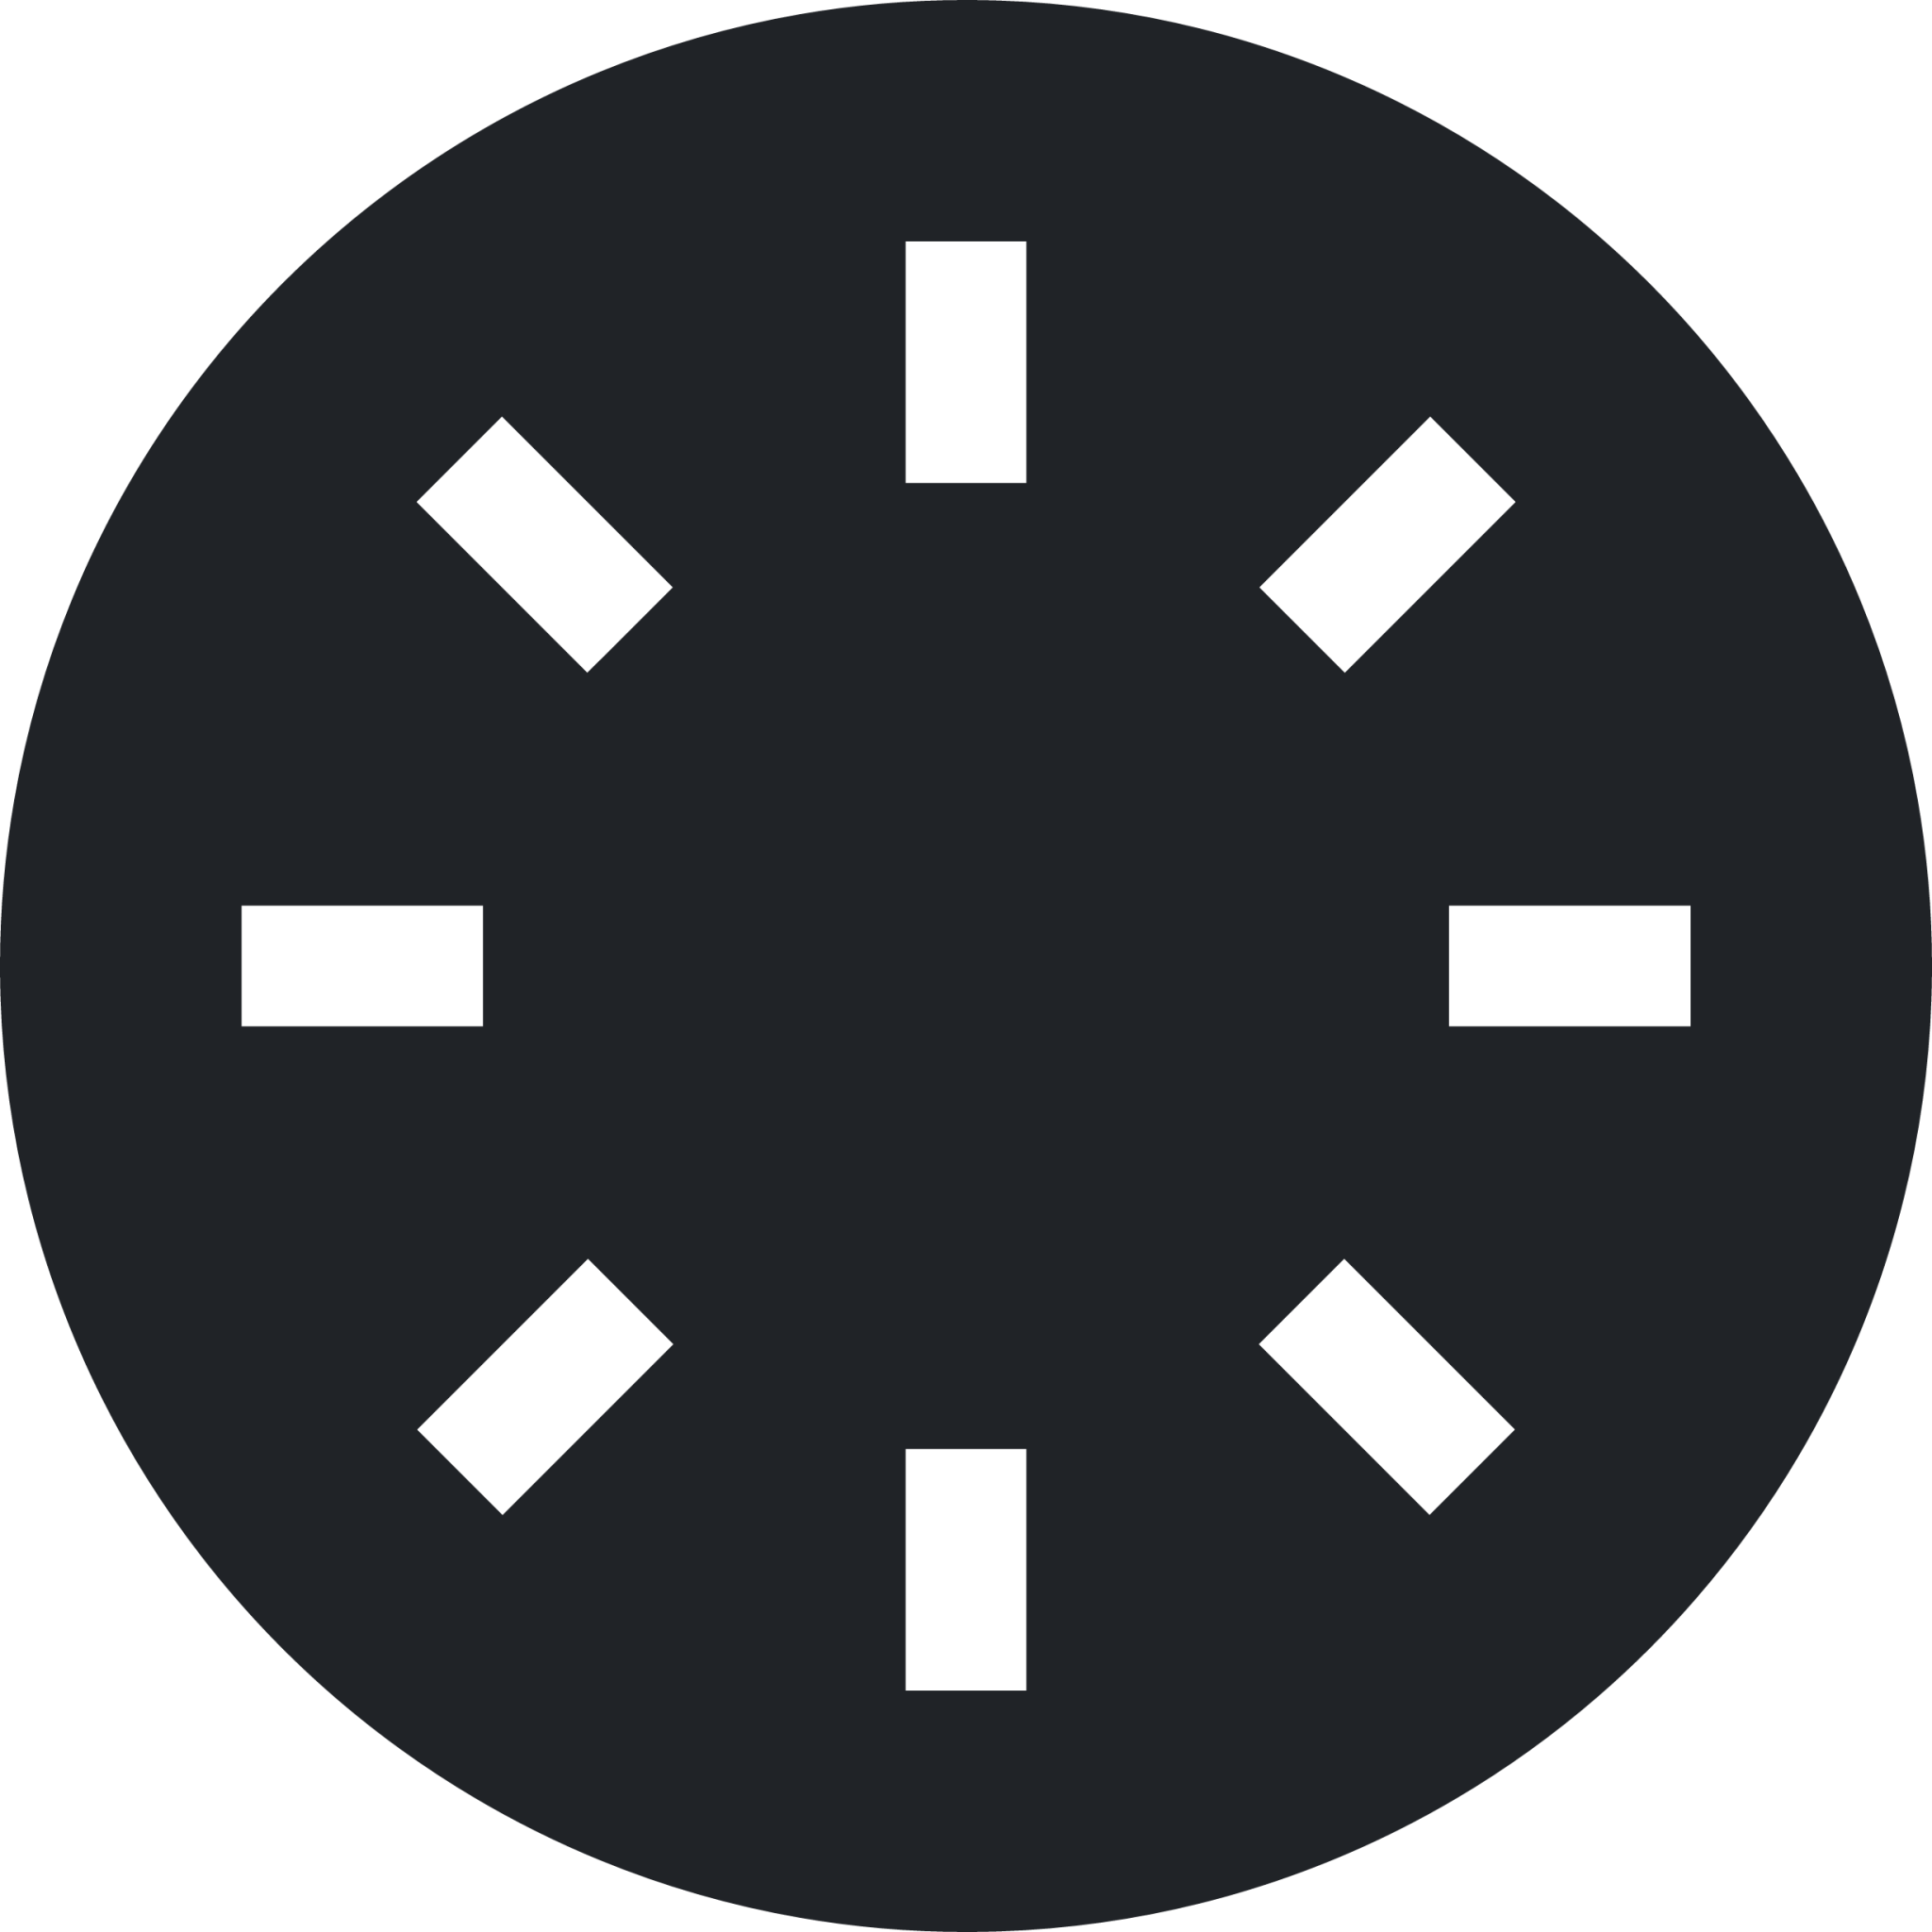 lcircle (sharp filled) icon